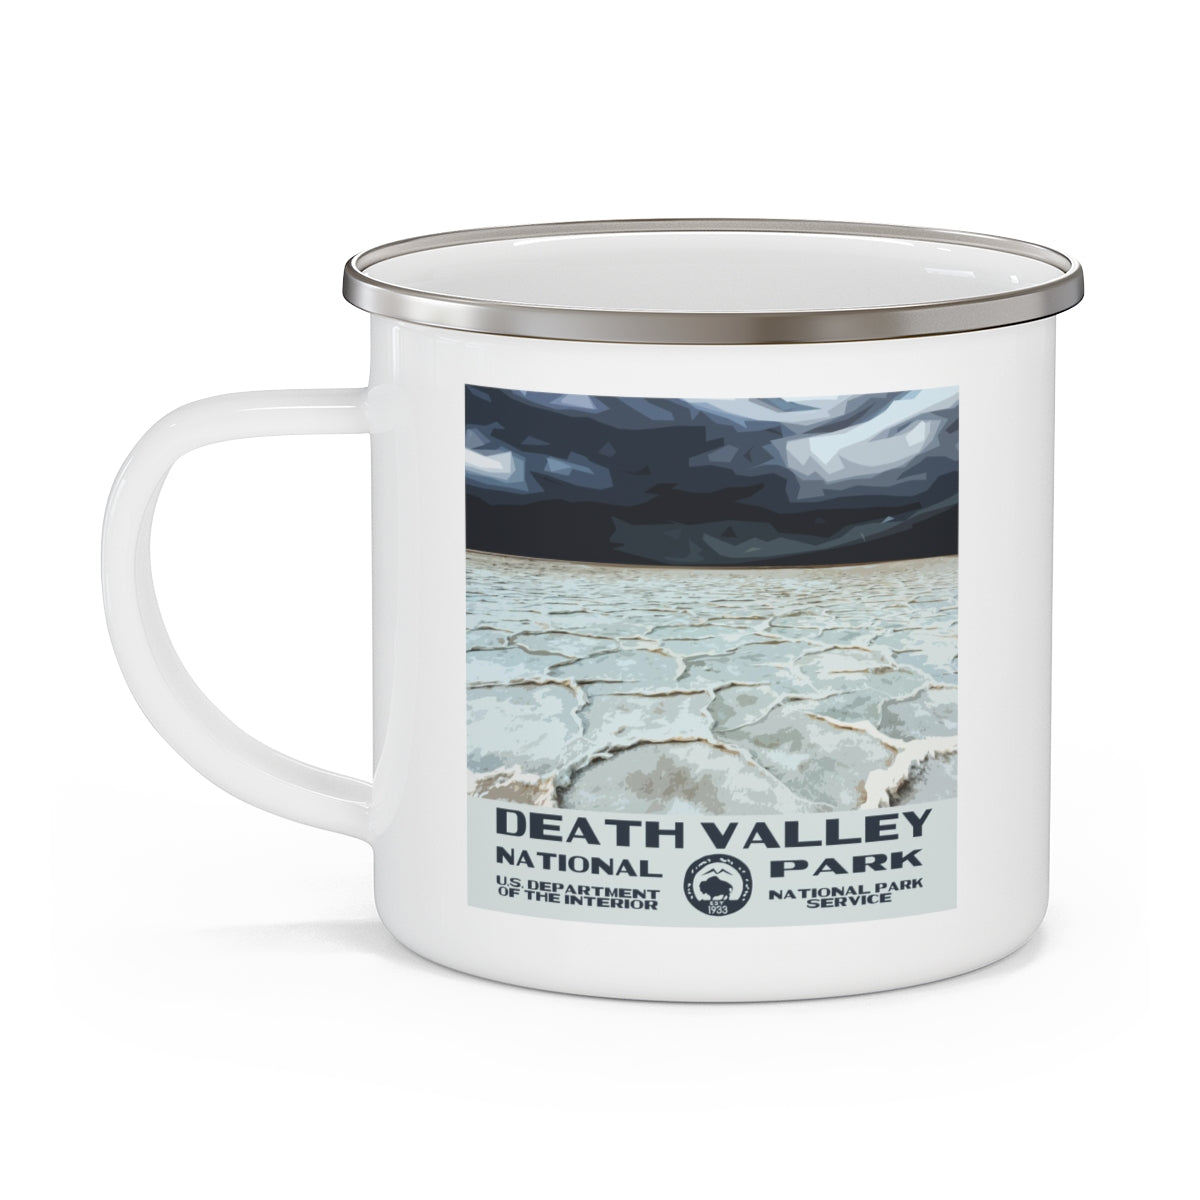 Death Valley National Park Enamel Camping Mug